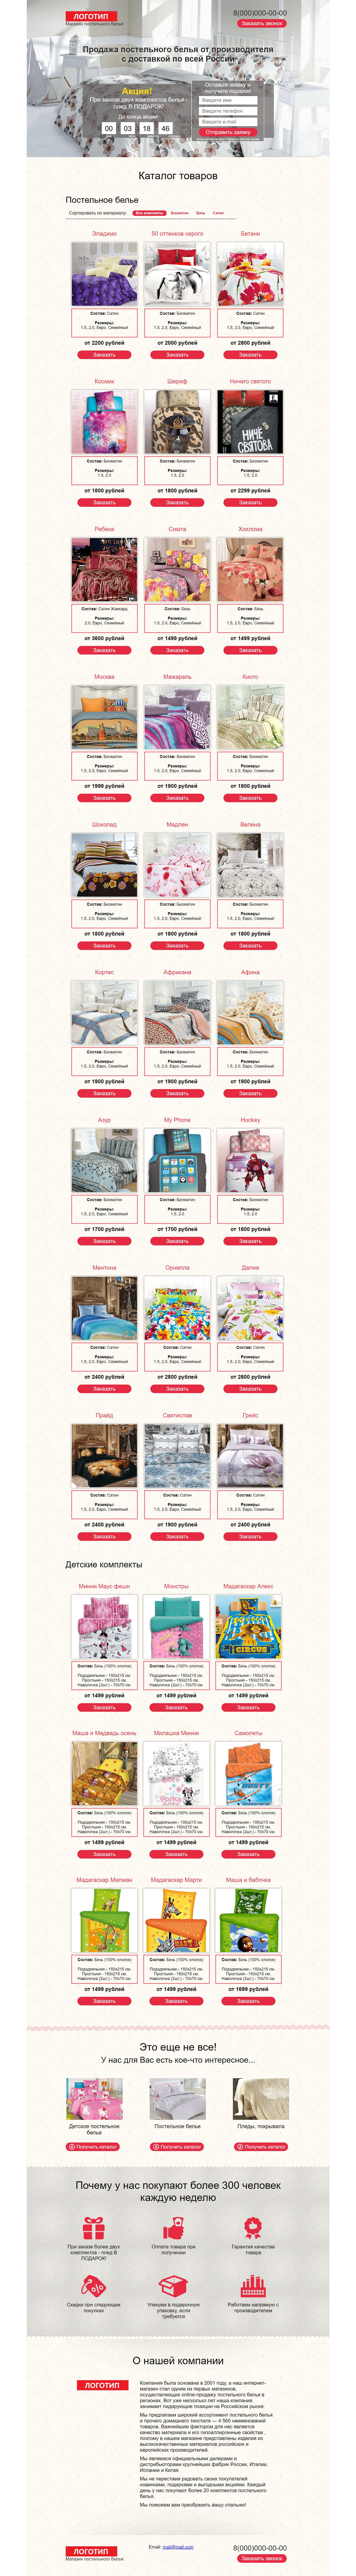 Landing page - Bed linen sale